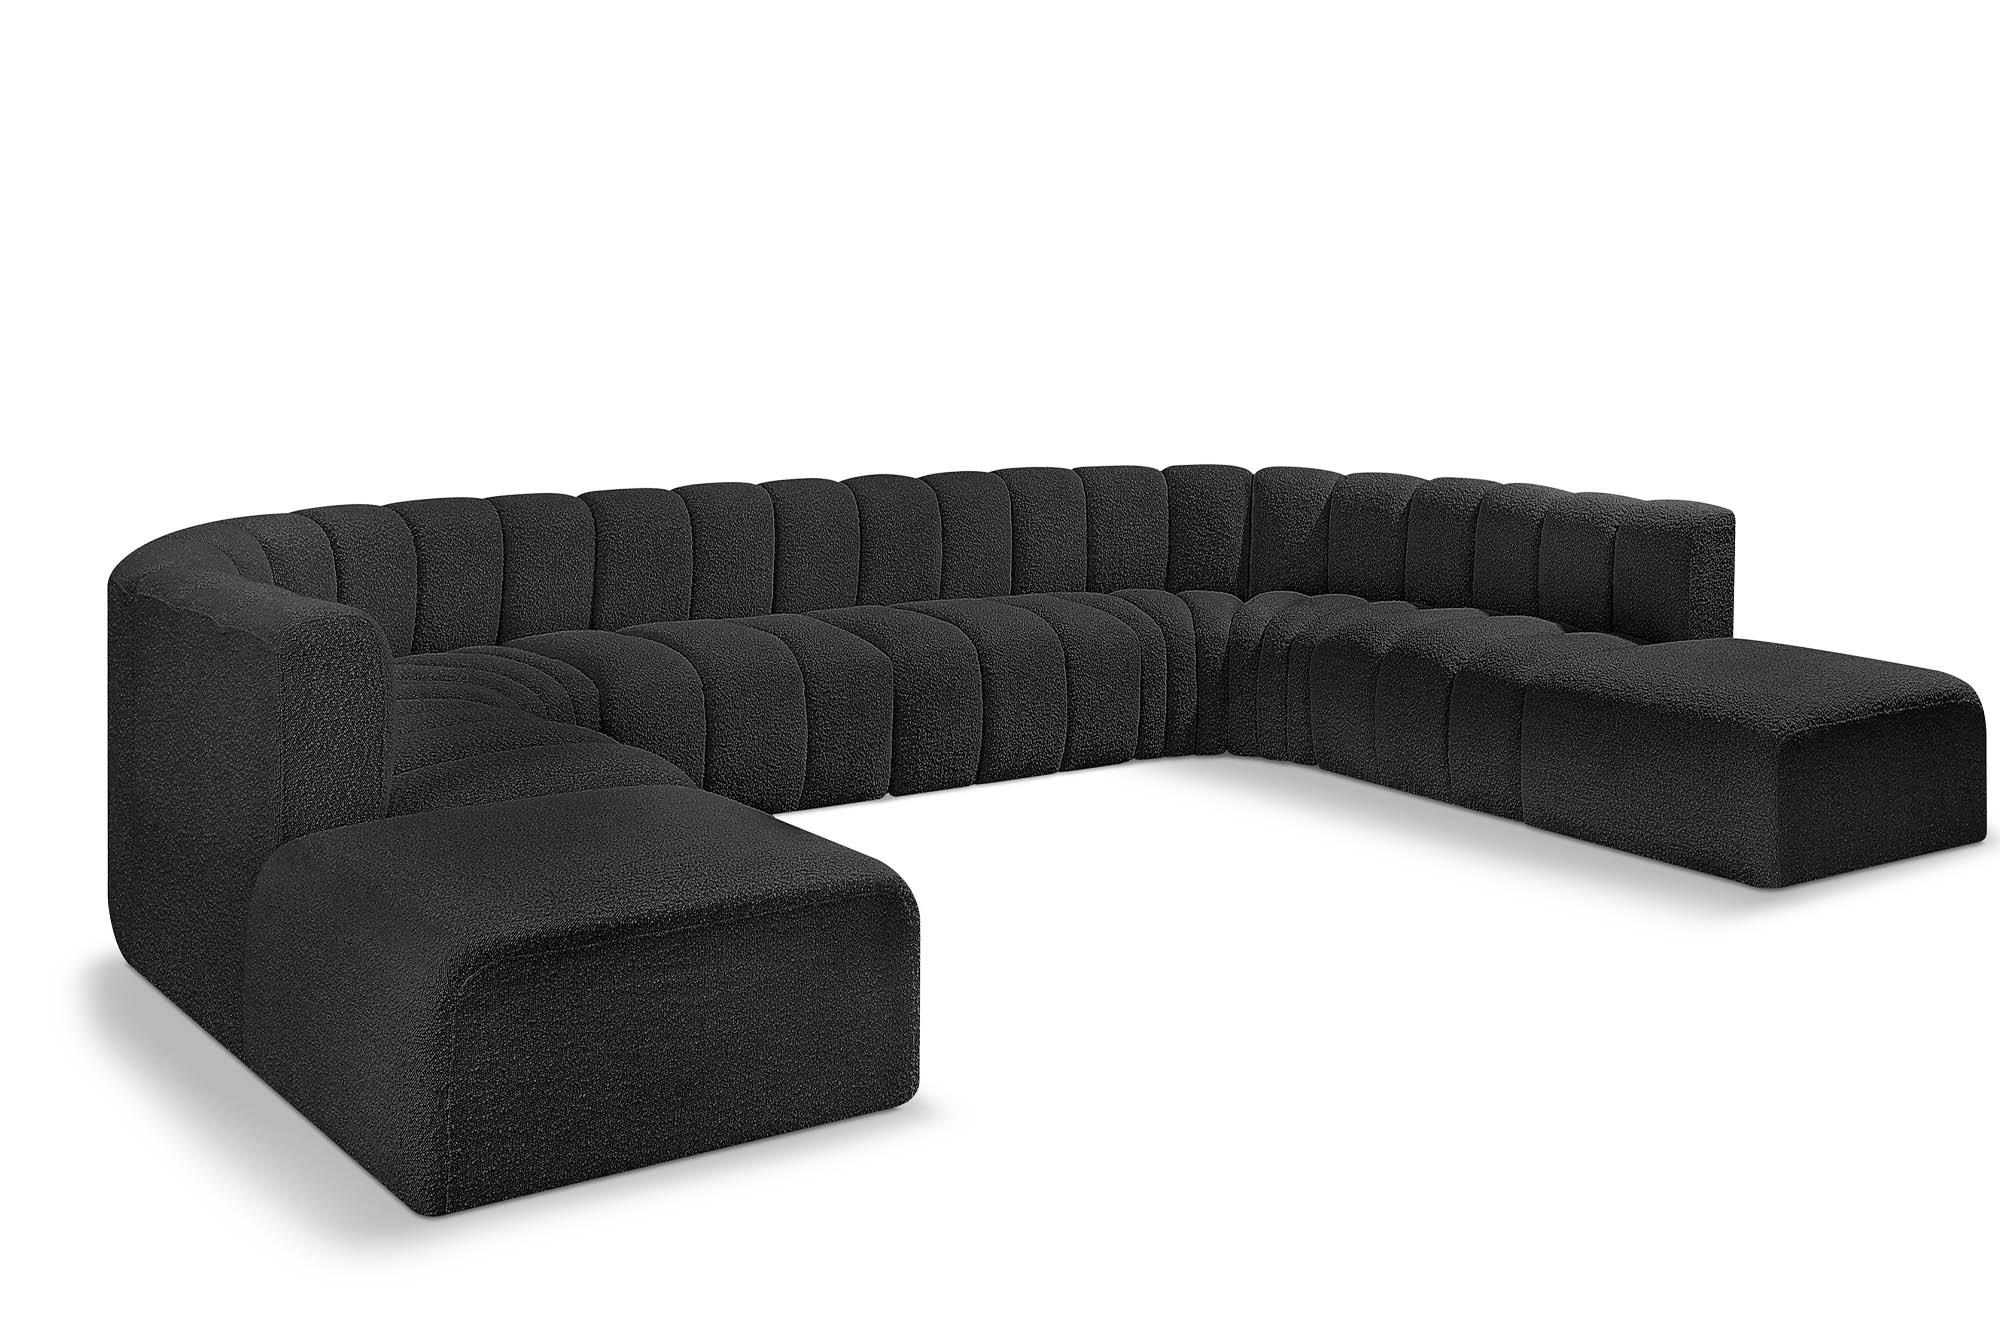 Contemporary, Modern Modular Sectional Sofa ARC 102Black-S10A 102Black-S10A in Black 